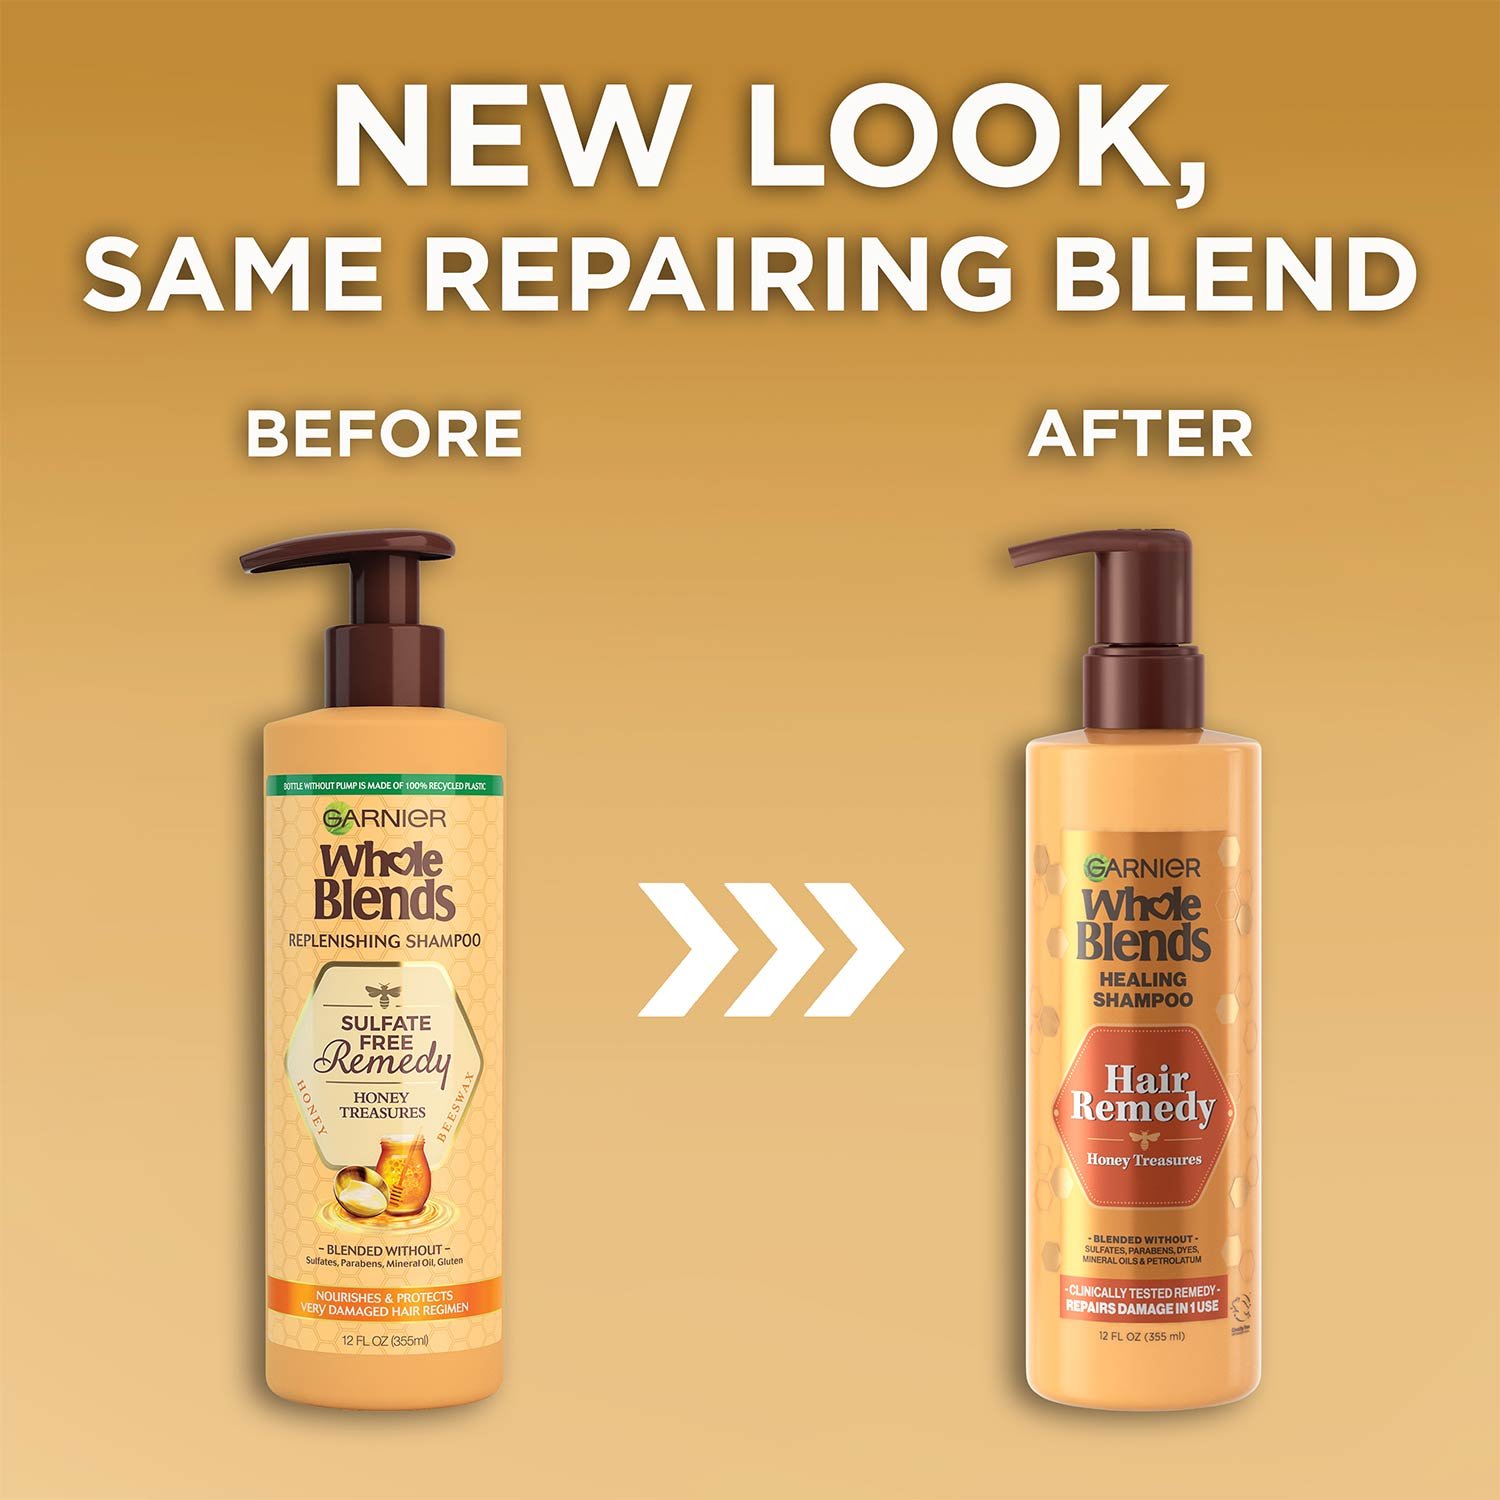 Whole Blends Honey Treasures shampoo new look, same blend